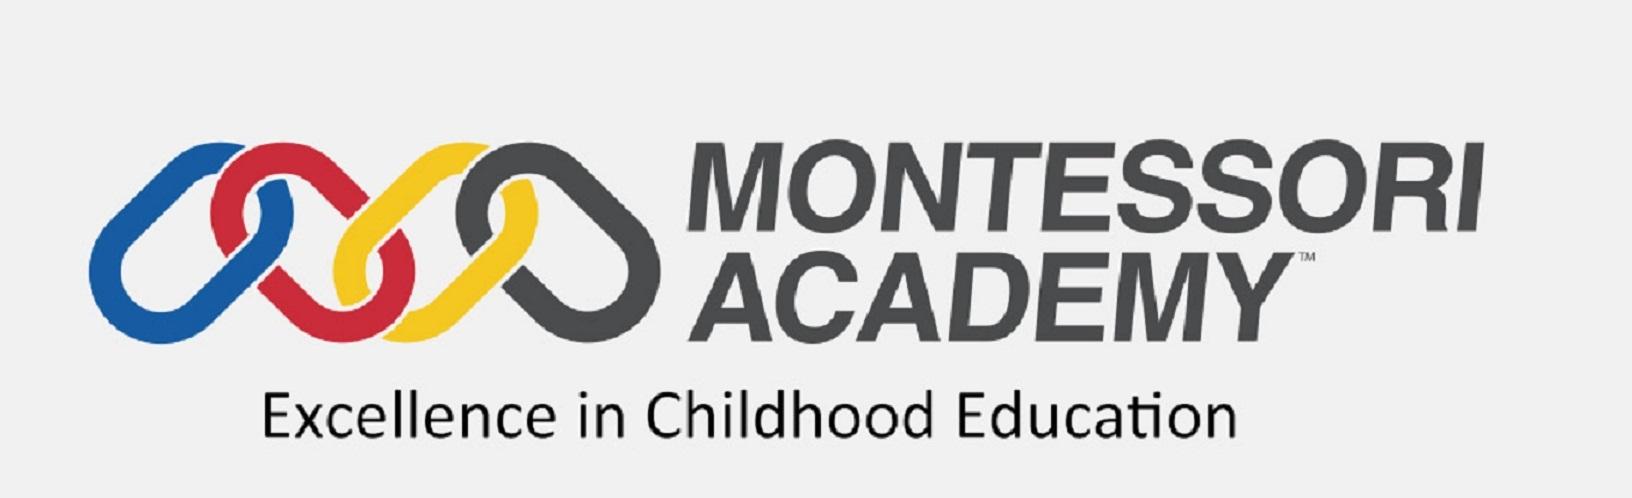 Shanghai Montessori Academy Co., Ltd image